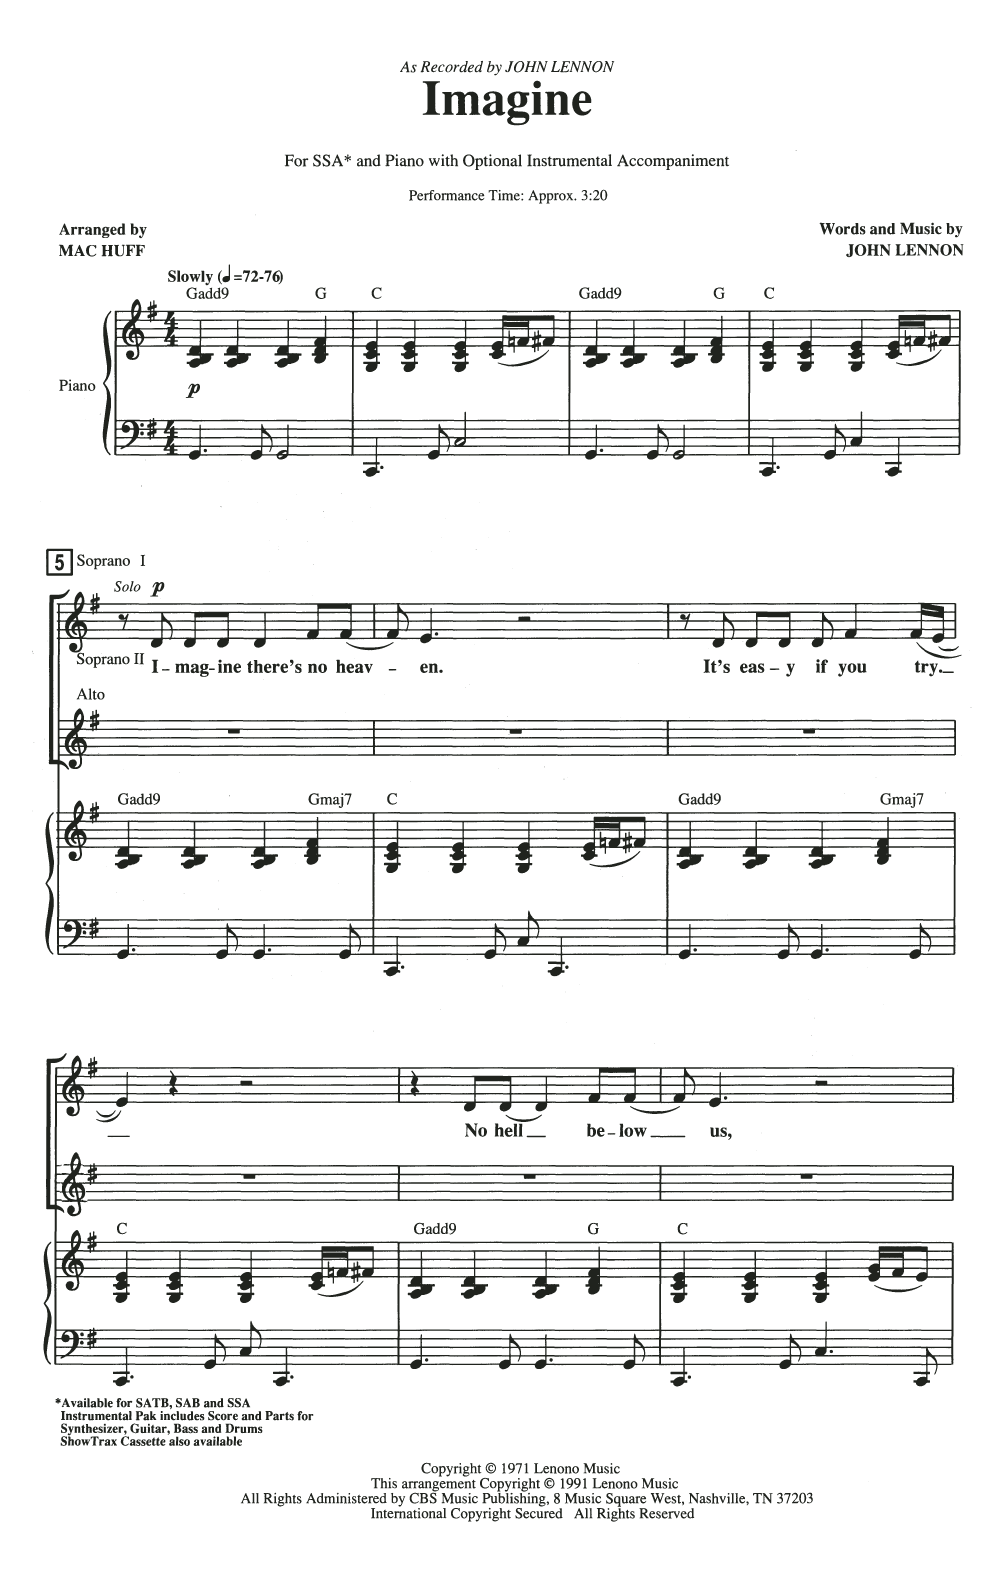 John Lennon Imagine (arr. Mac Huff) Sheet Music Notes & Chords for SAB - Download or Print PDF